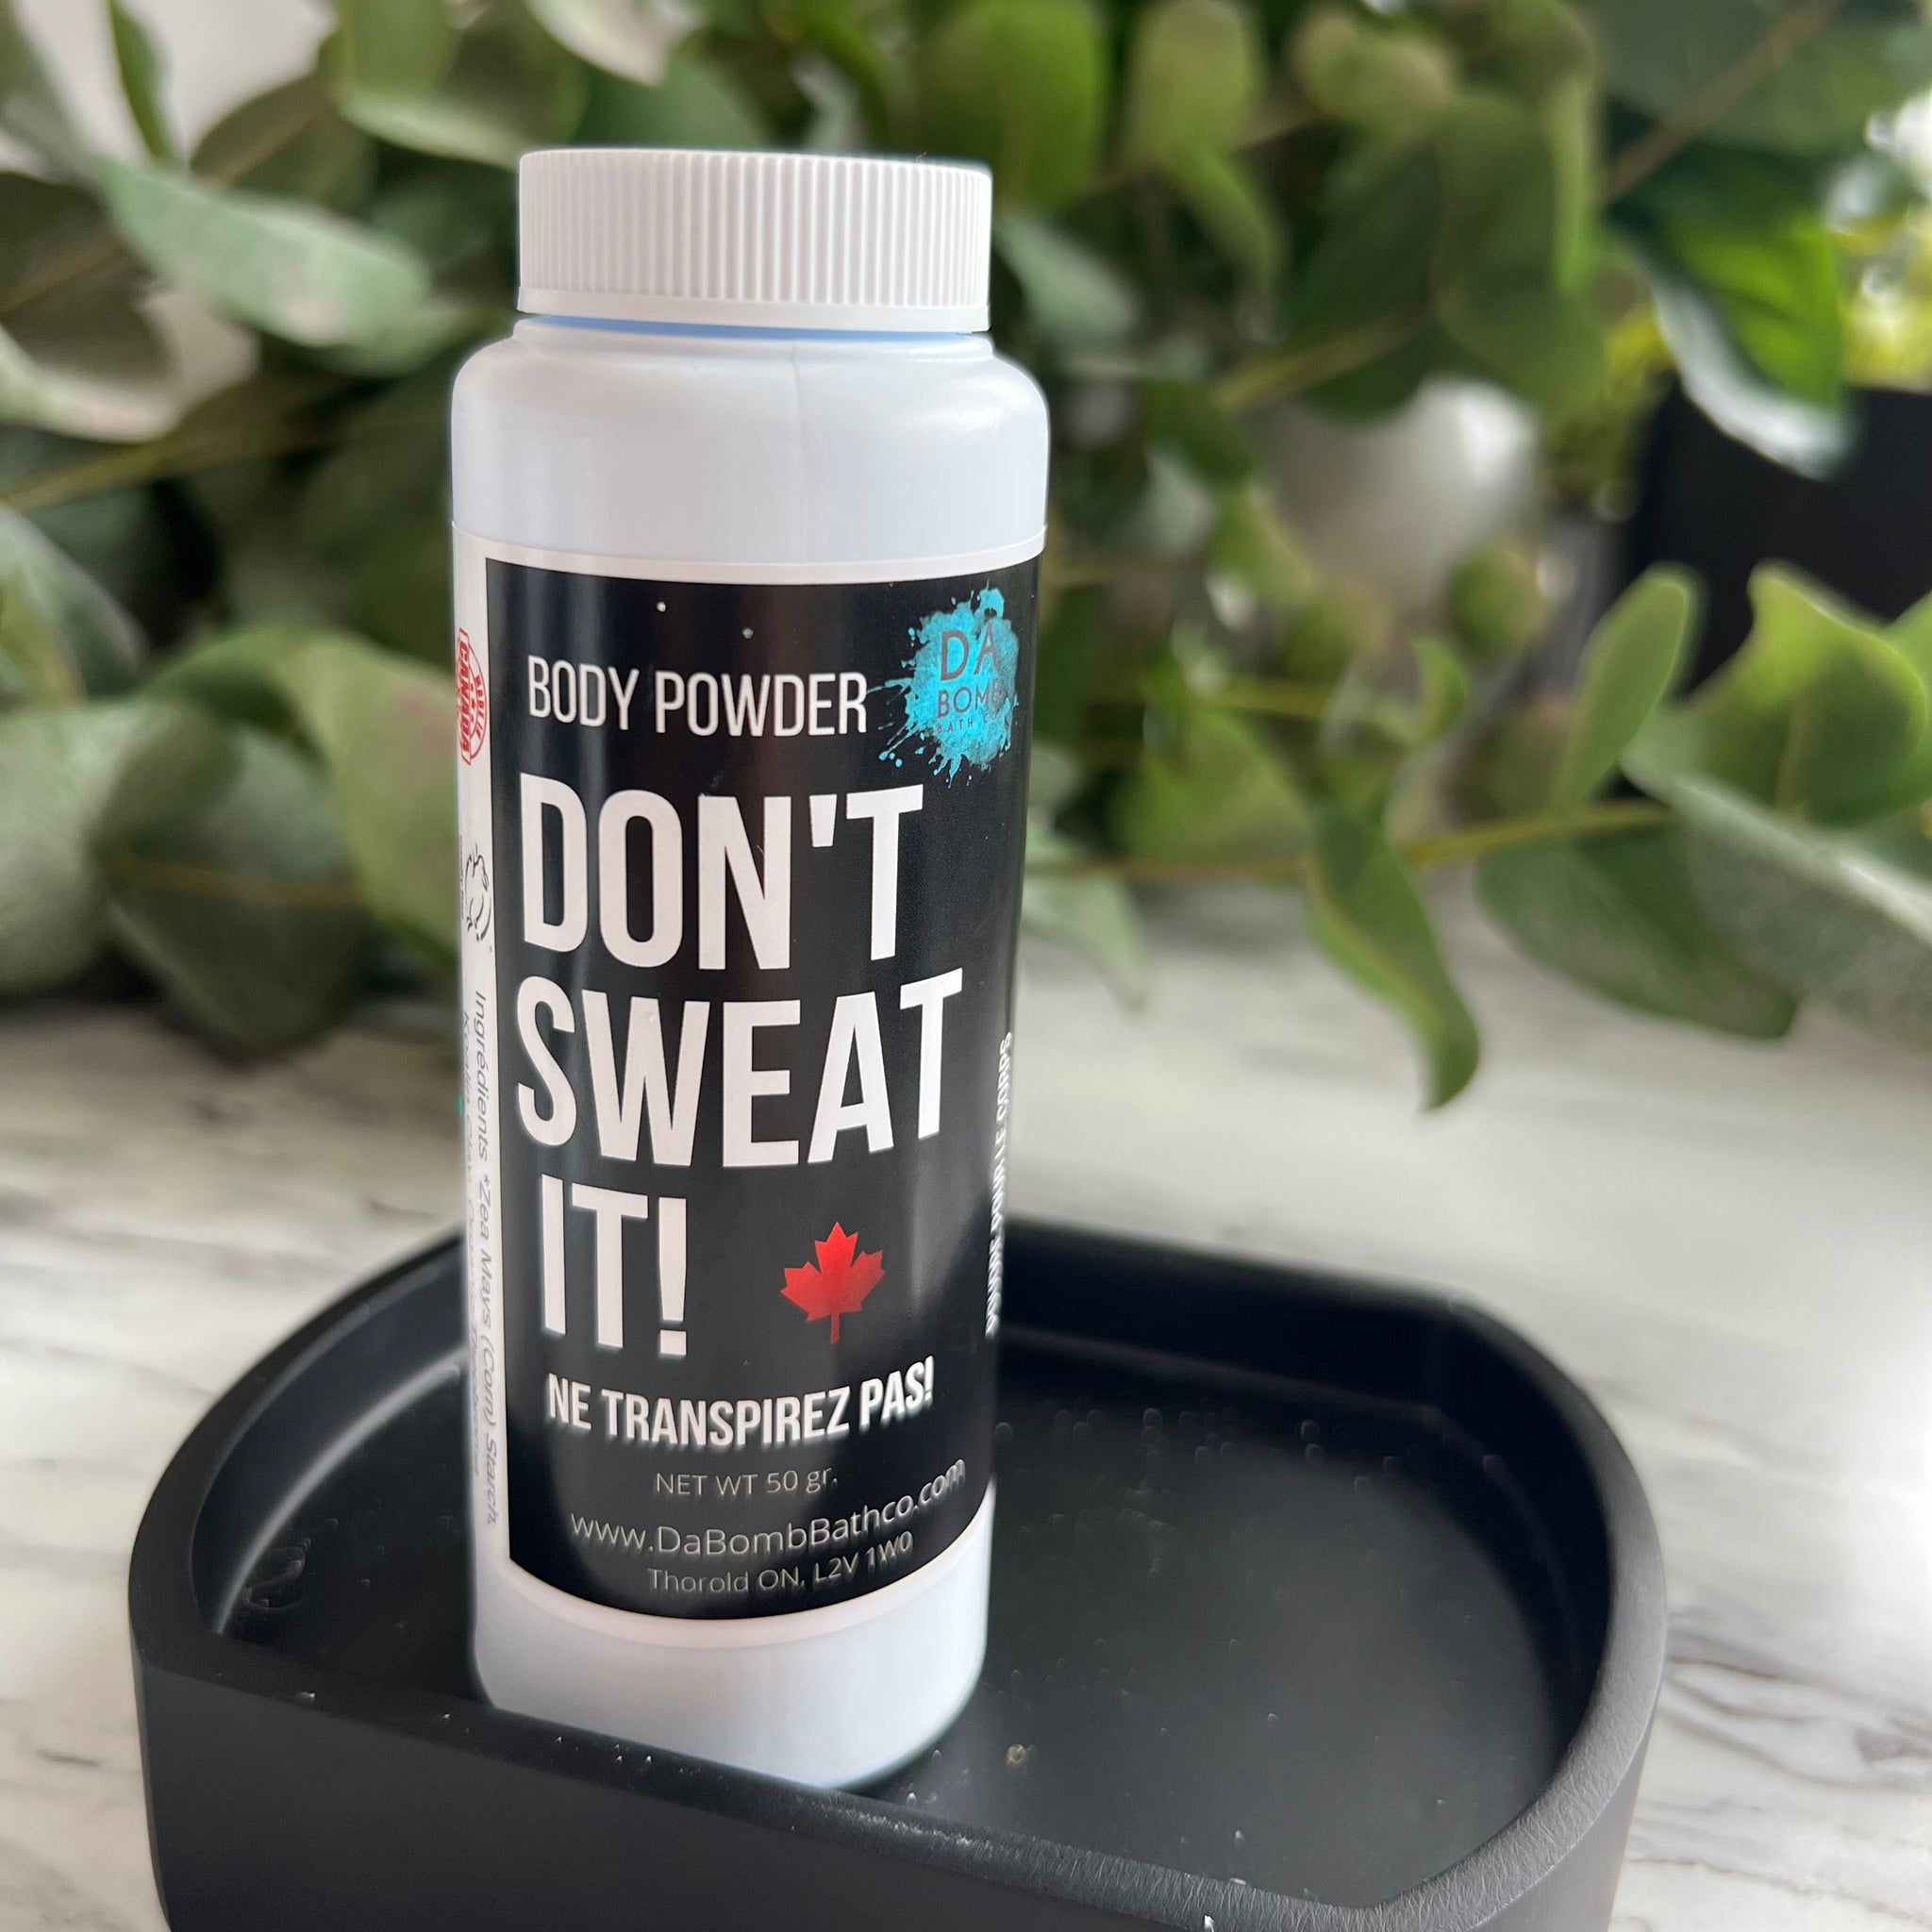 Don't Sweat It! Body Powder